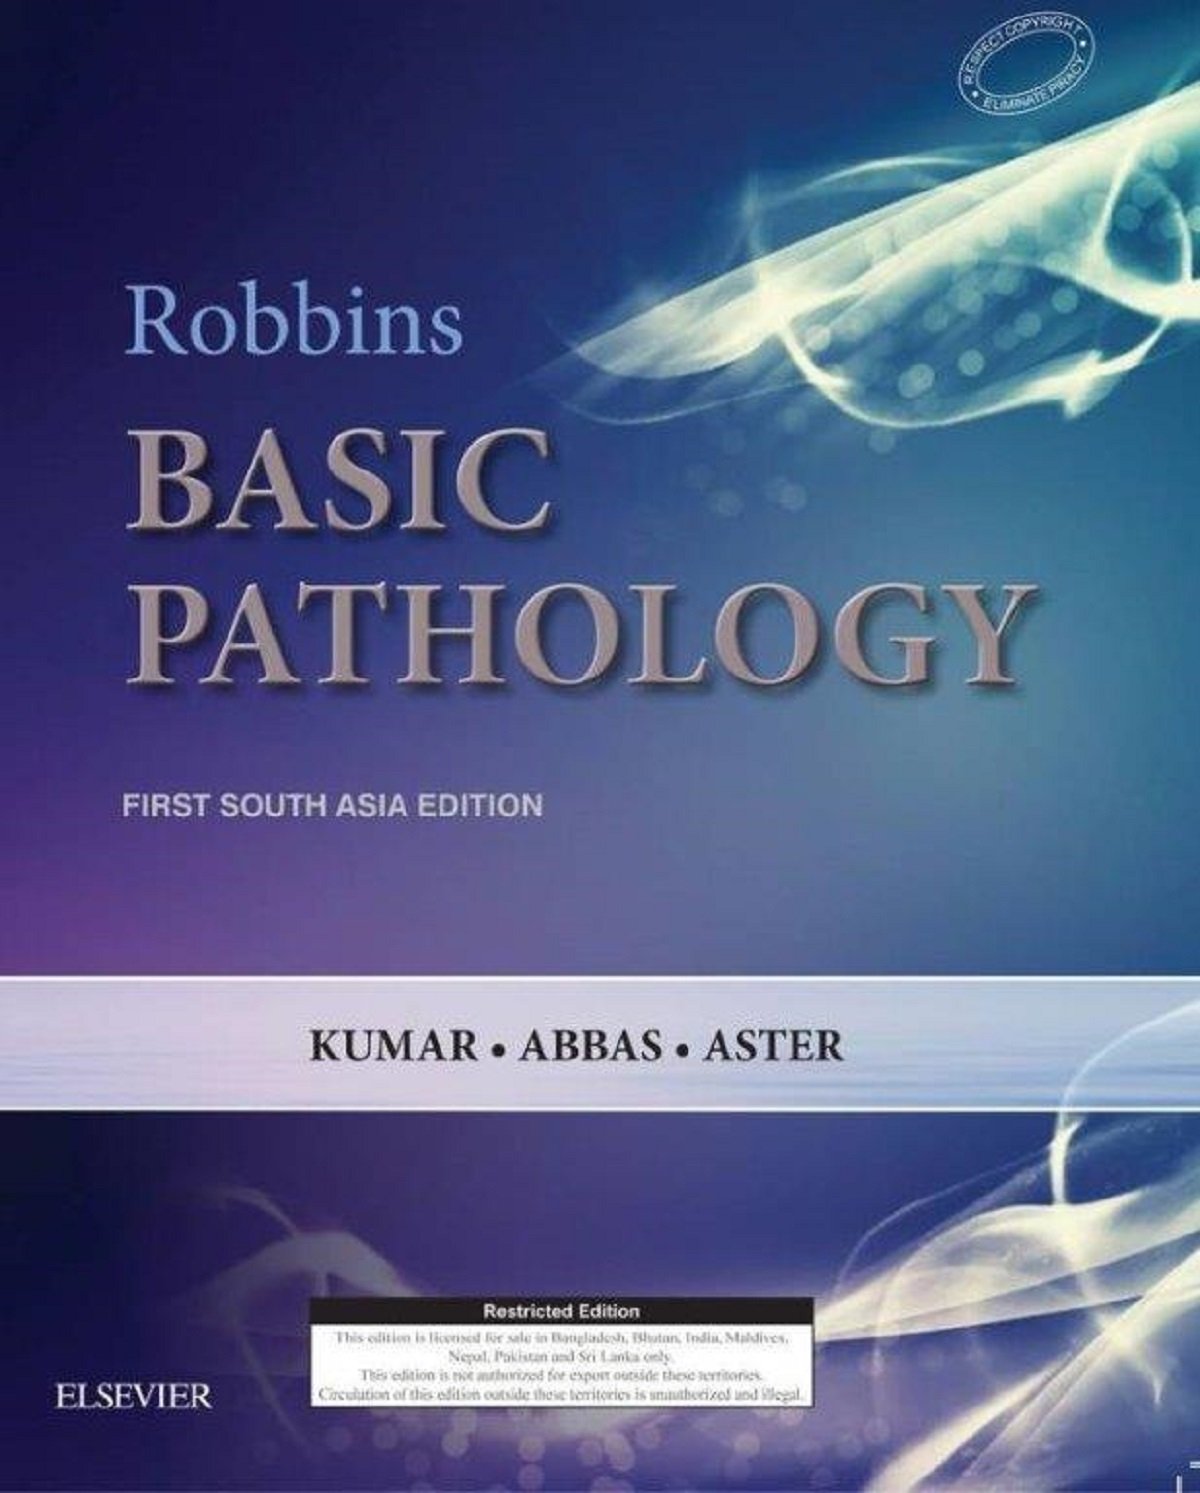 Robbins Basic Pathology: First South Asia Edition